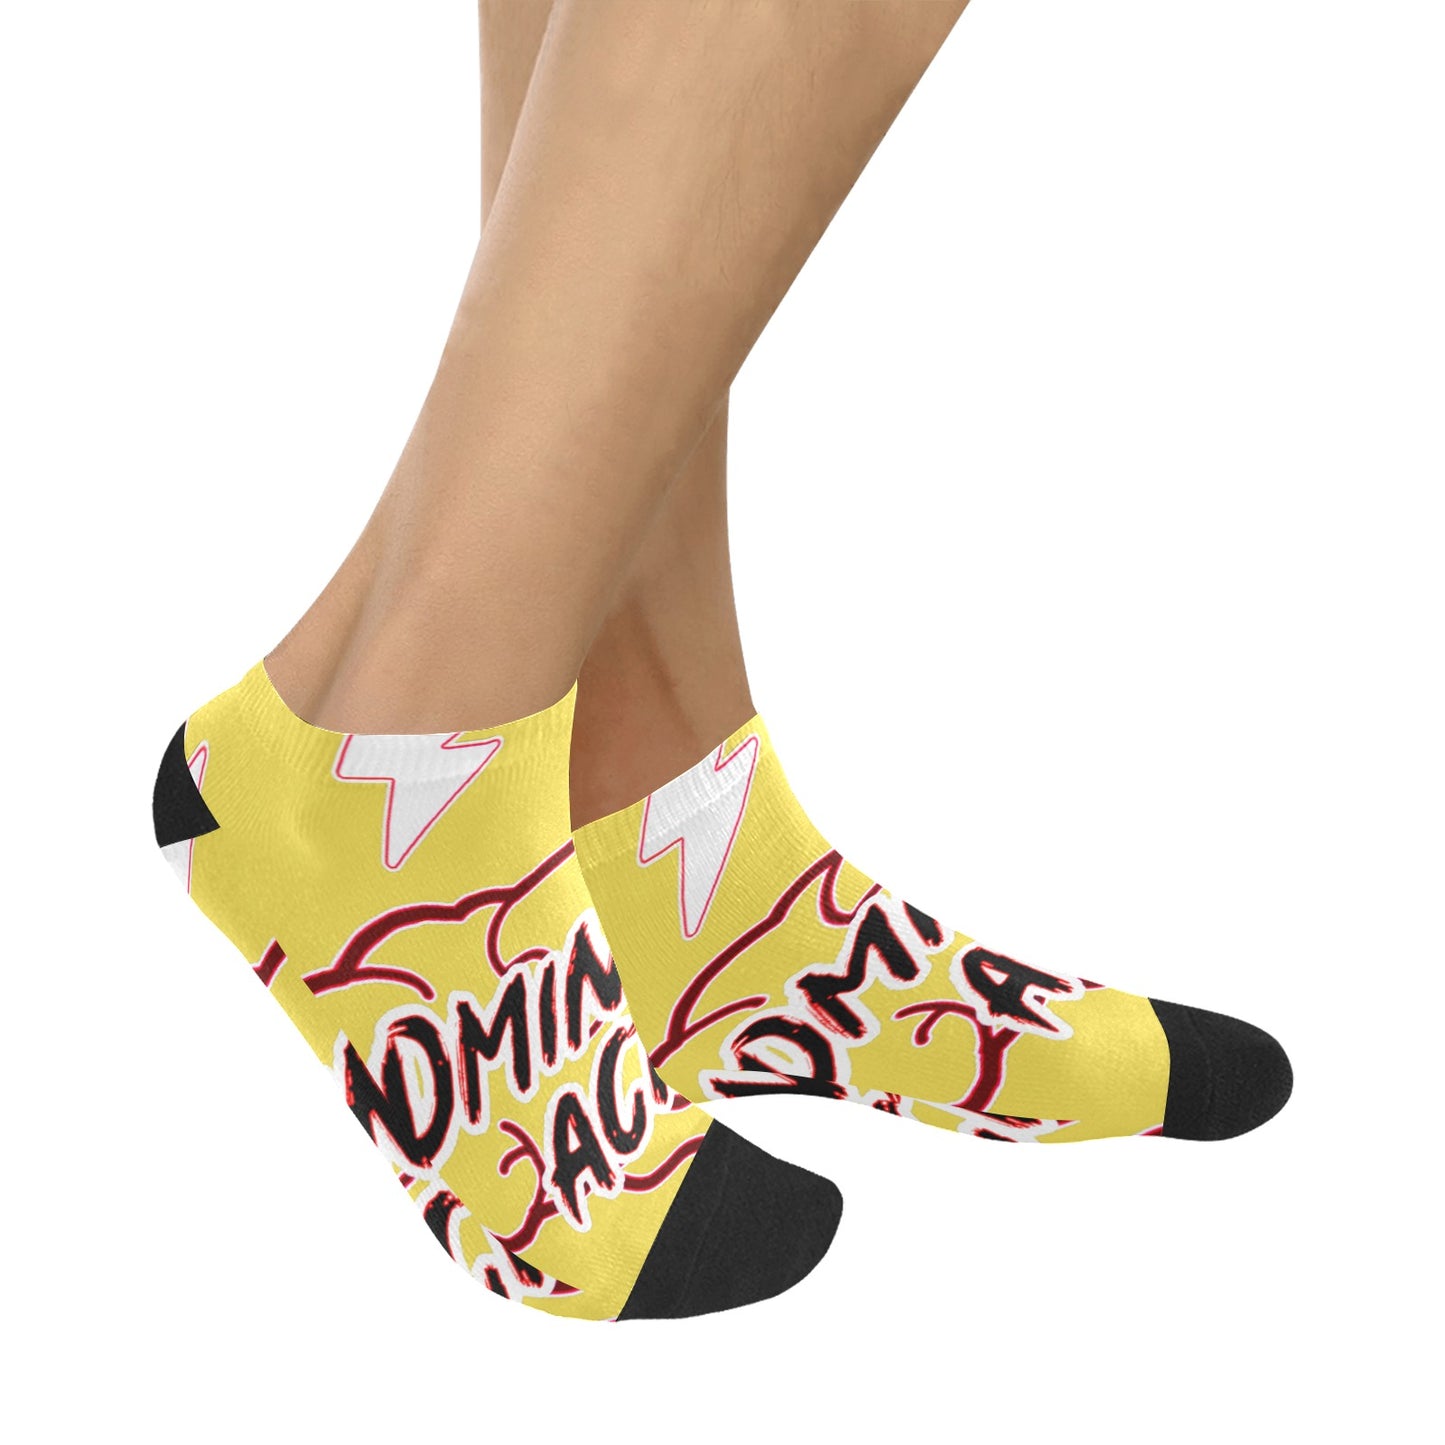 fz men's mind ankle socks one size / fz mind socks - yellow men's ankle socks